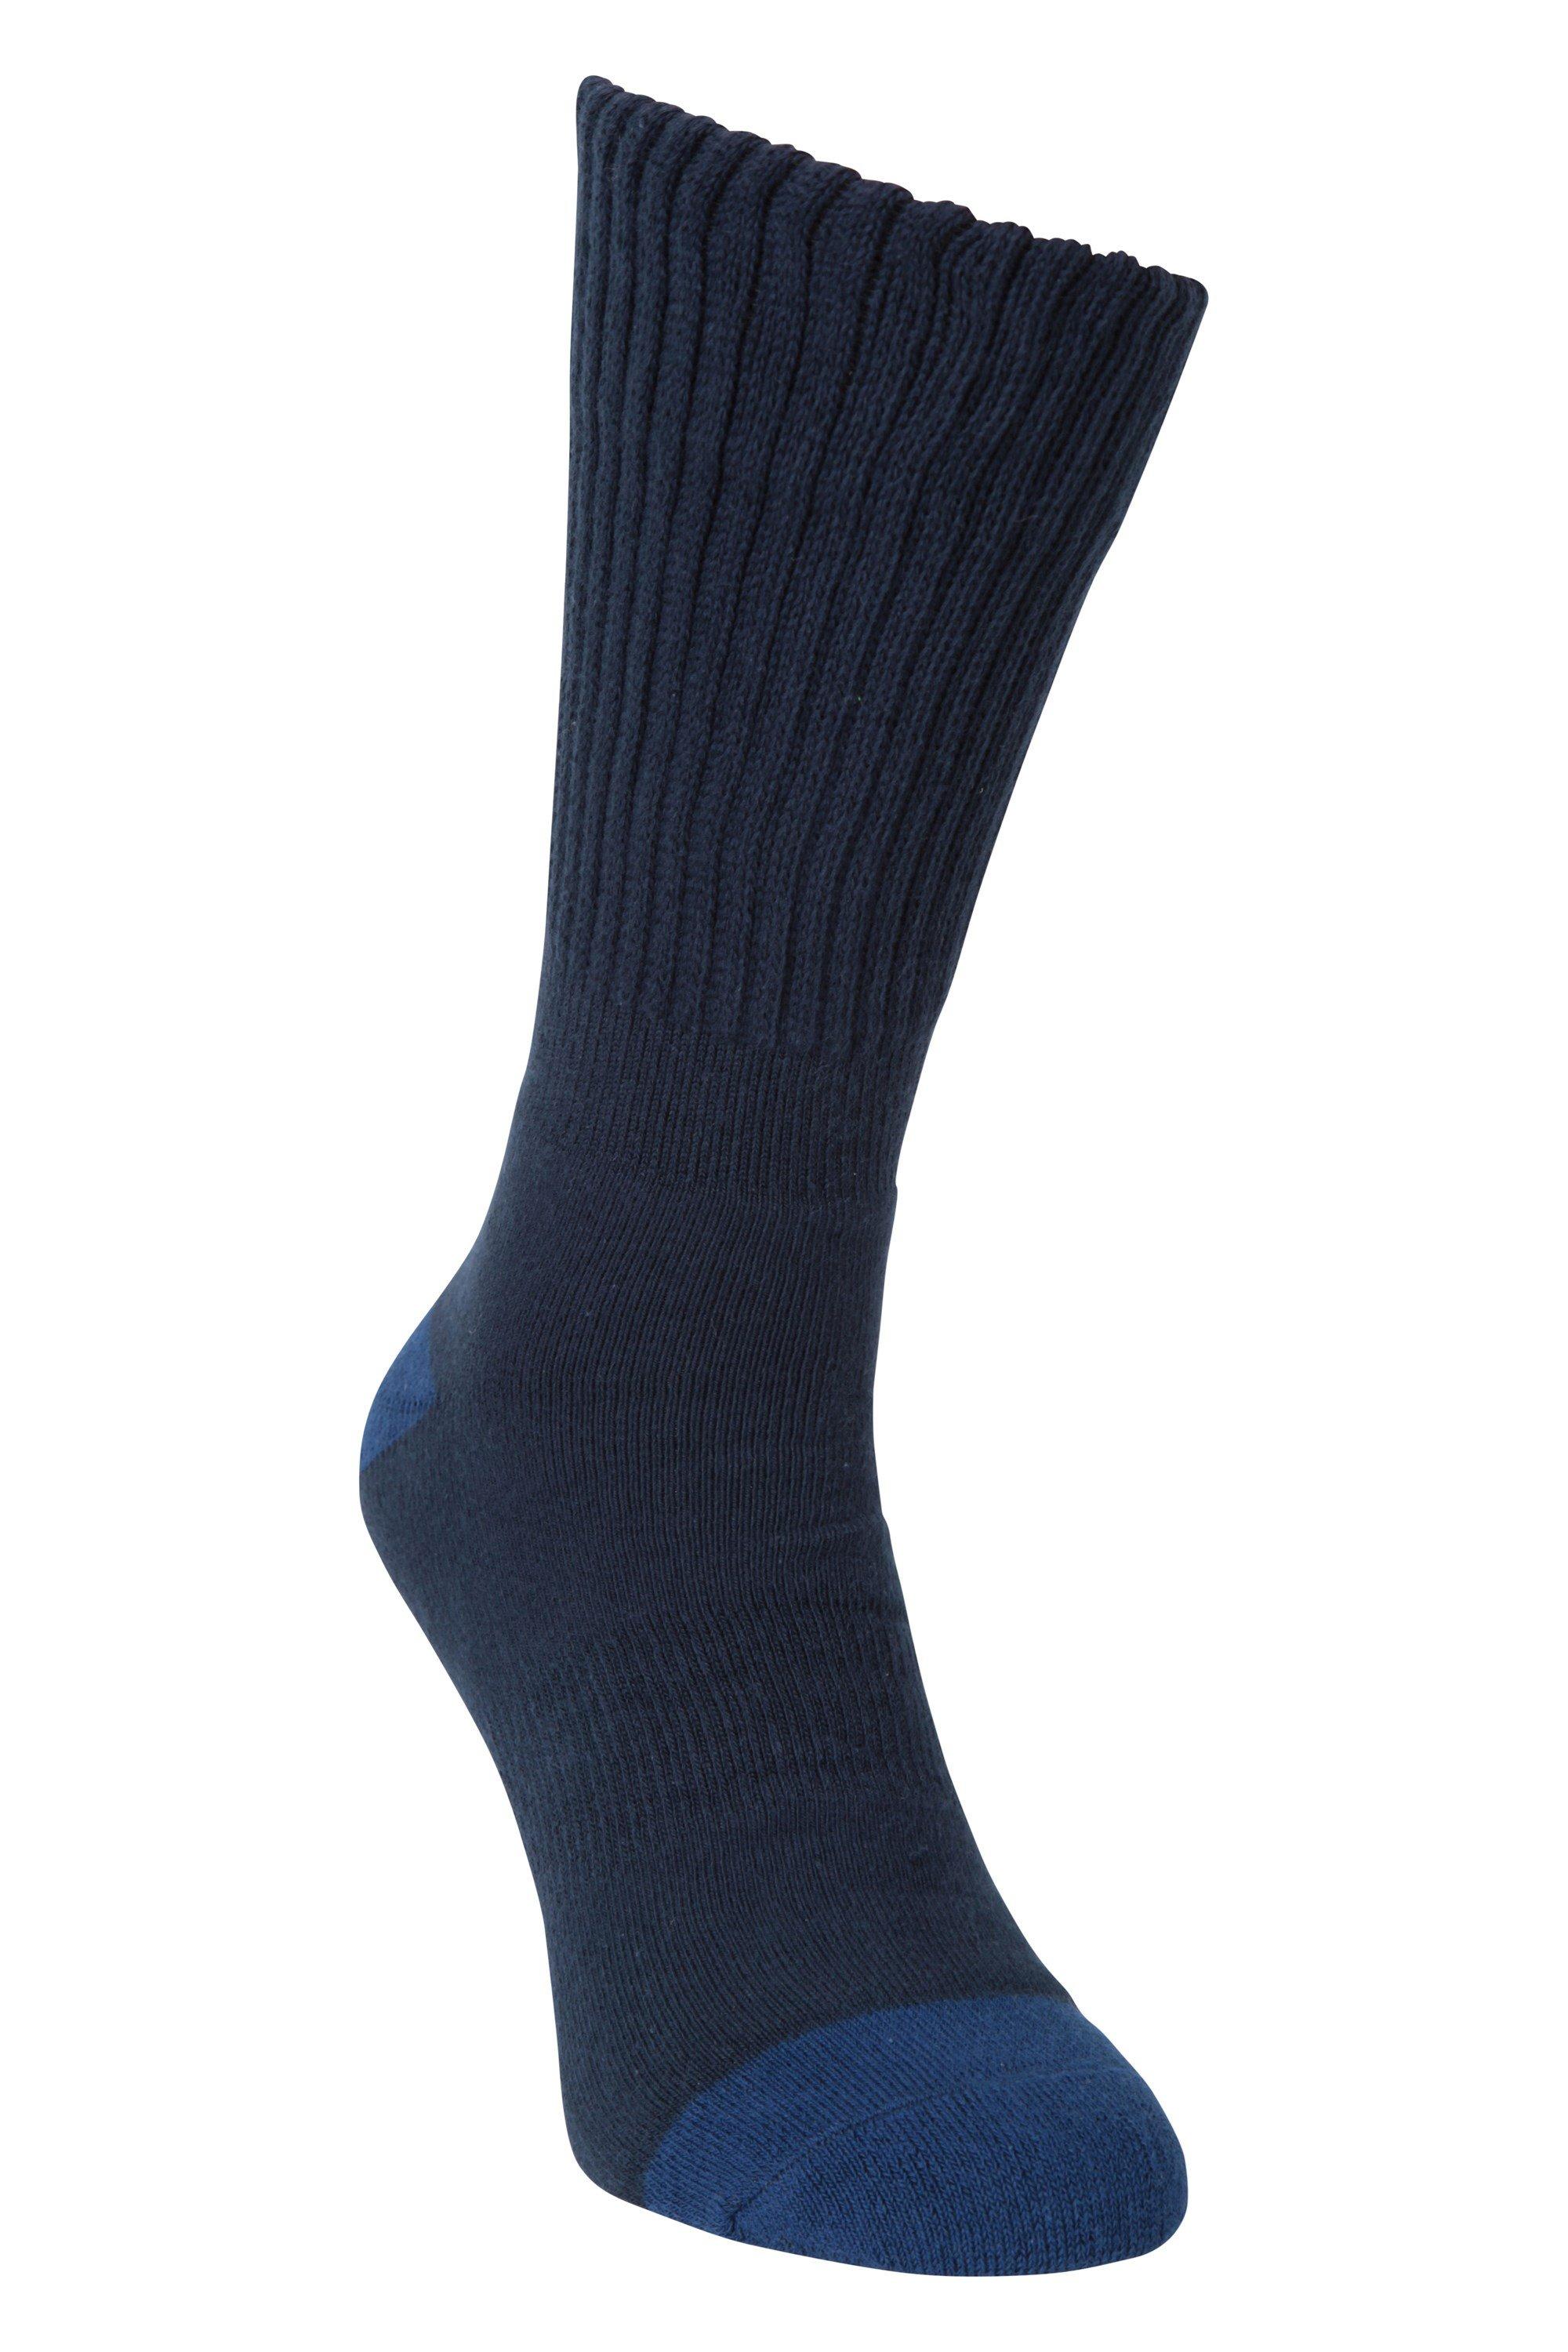 Anti Chafe Walking Sock Double Layer Breathable Socks